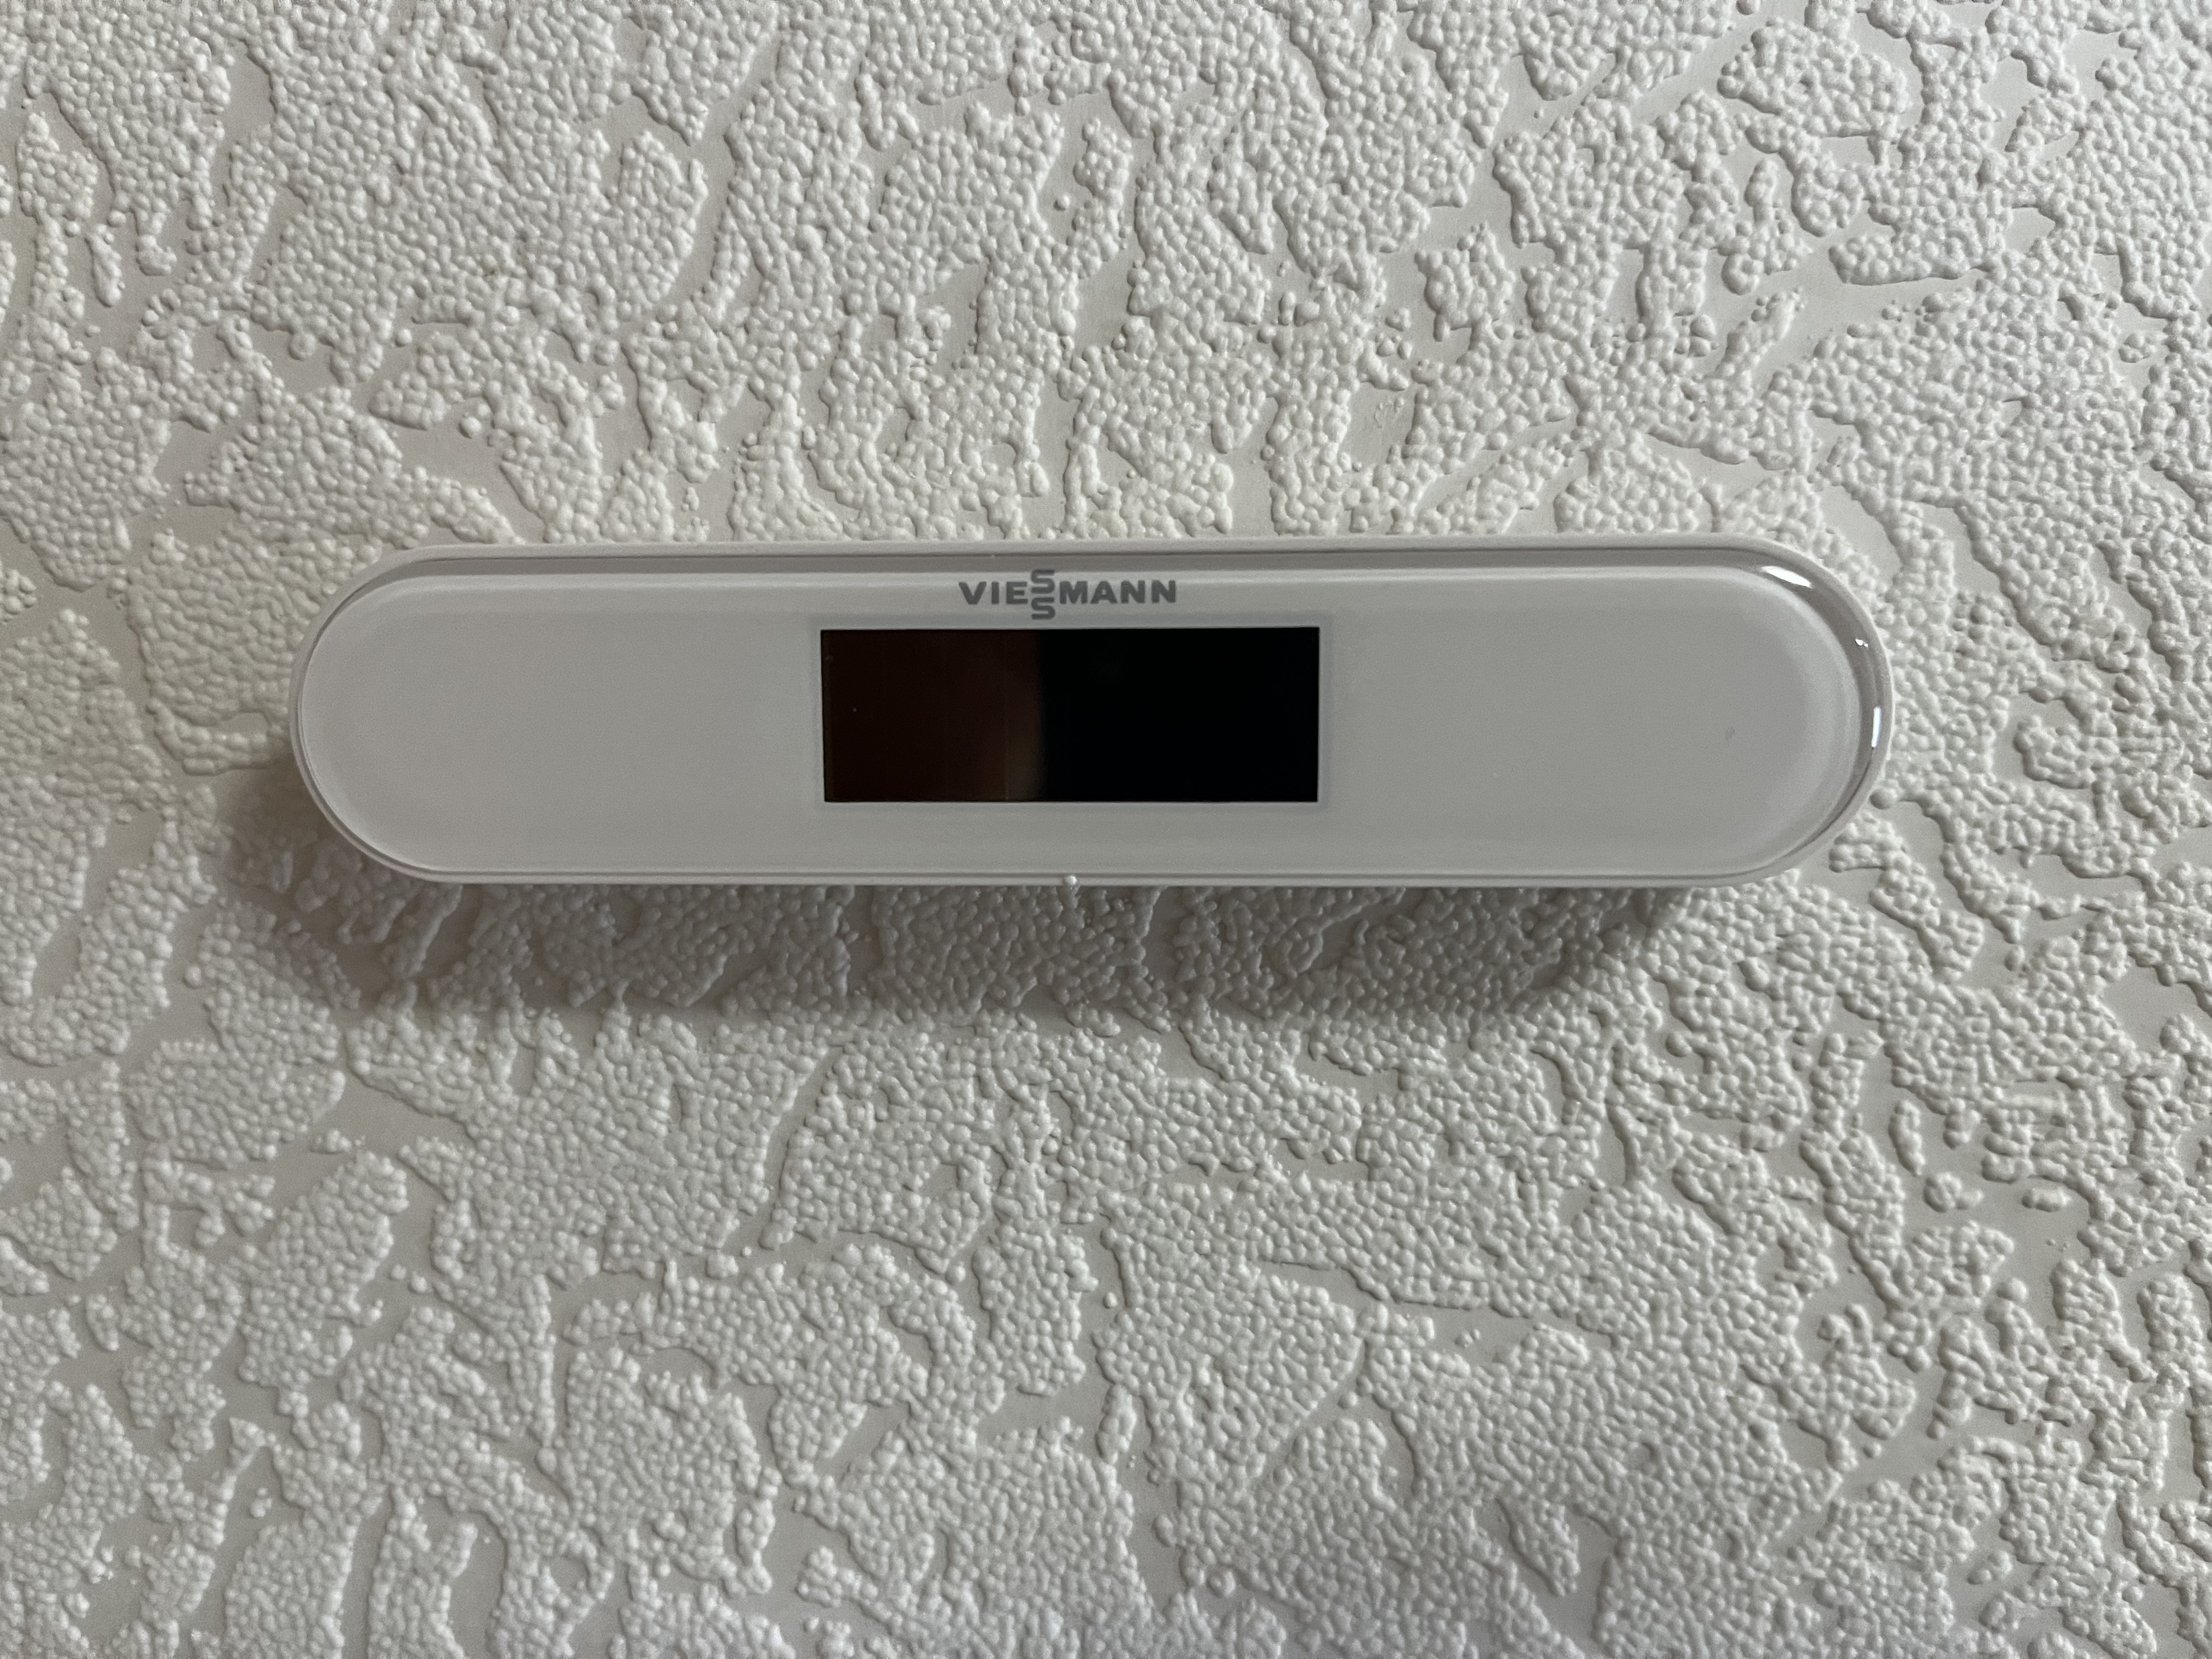 Thermostat.jpg